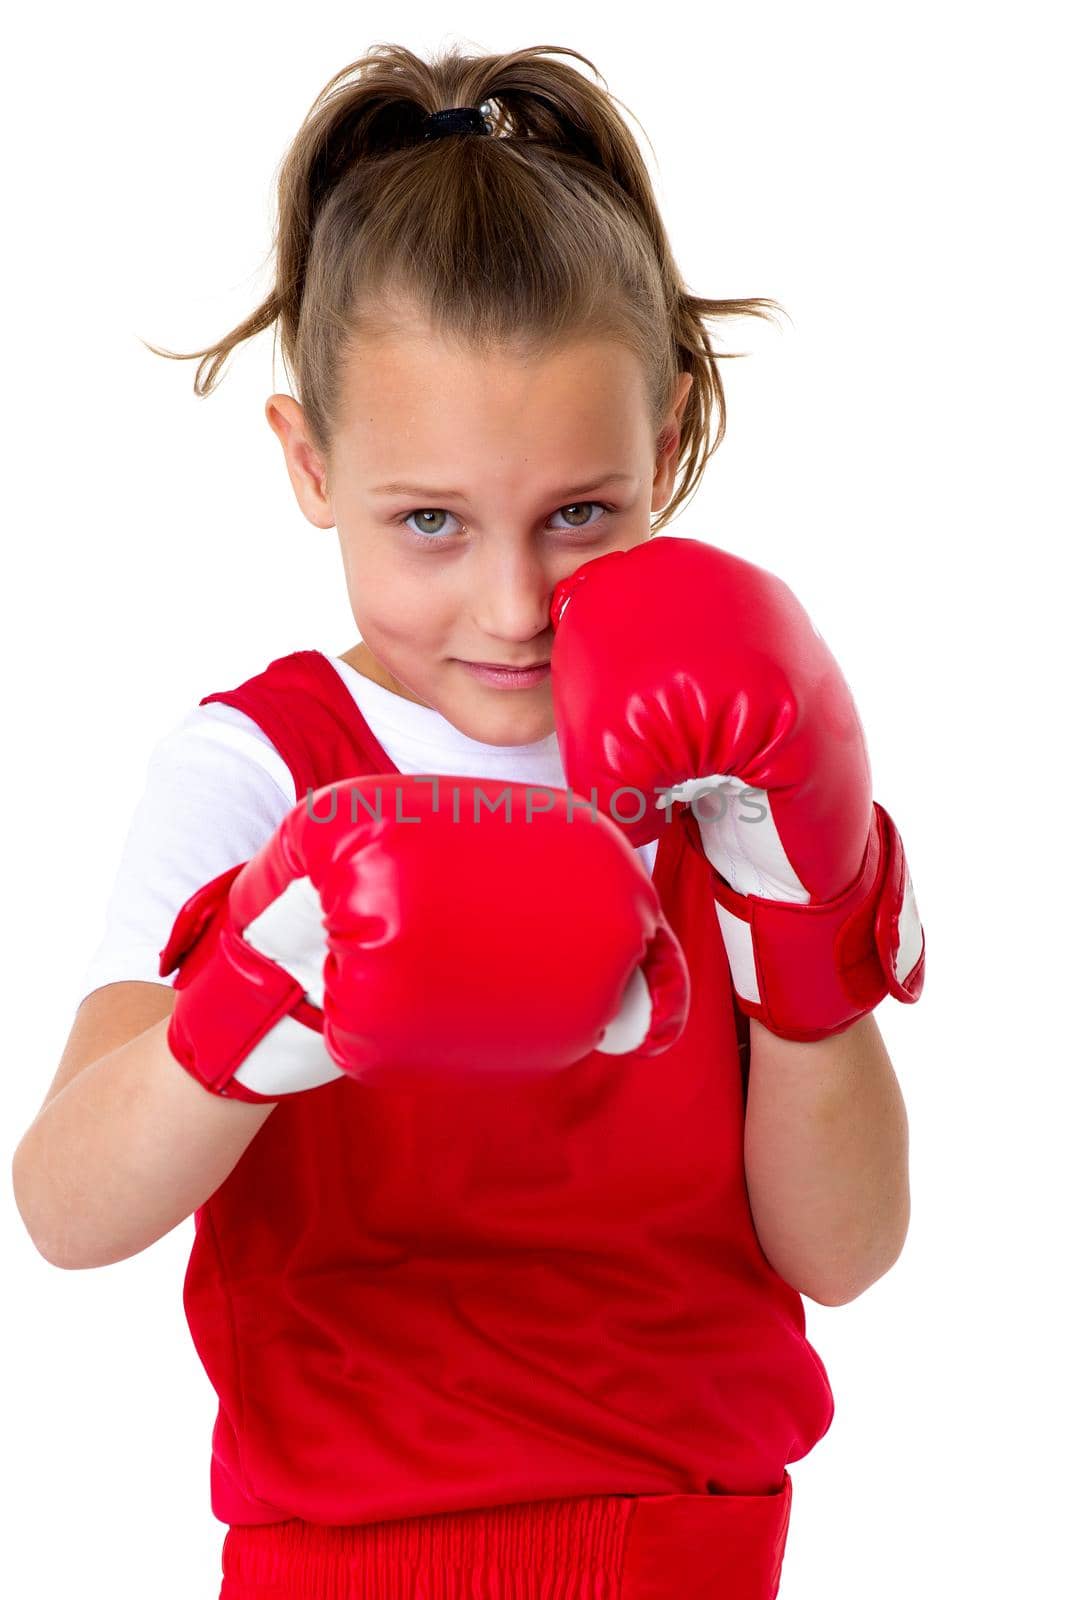 Sports boxer teenage girl, isolated on white background by kolesnikov_studio